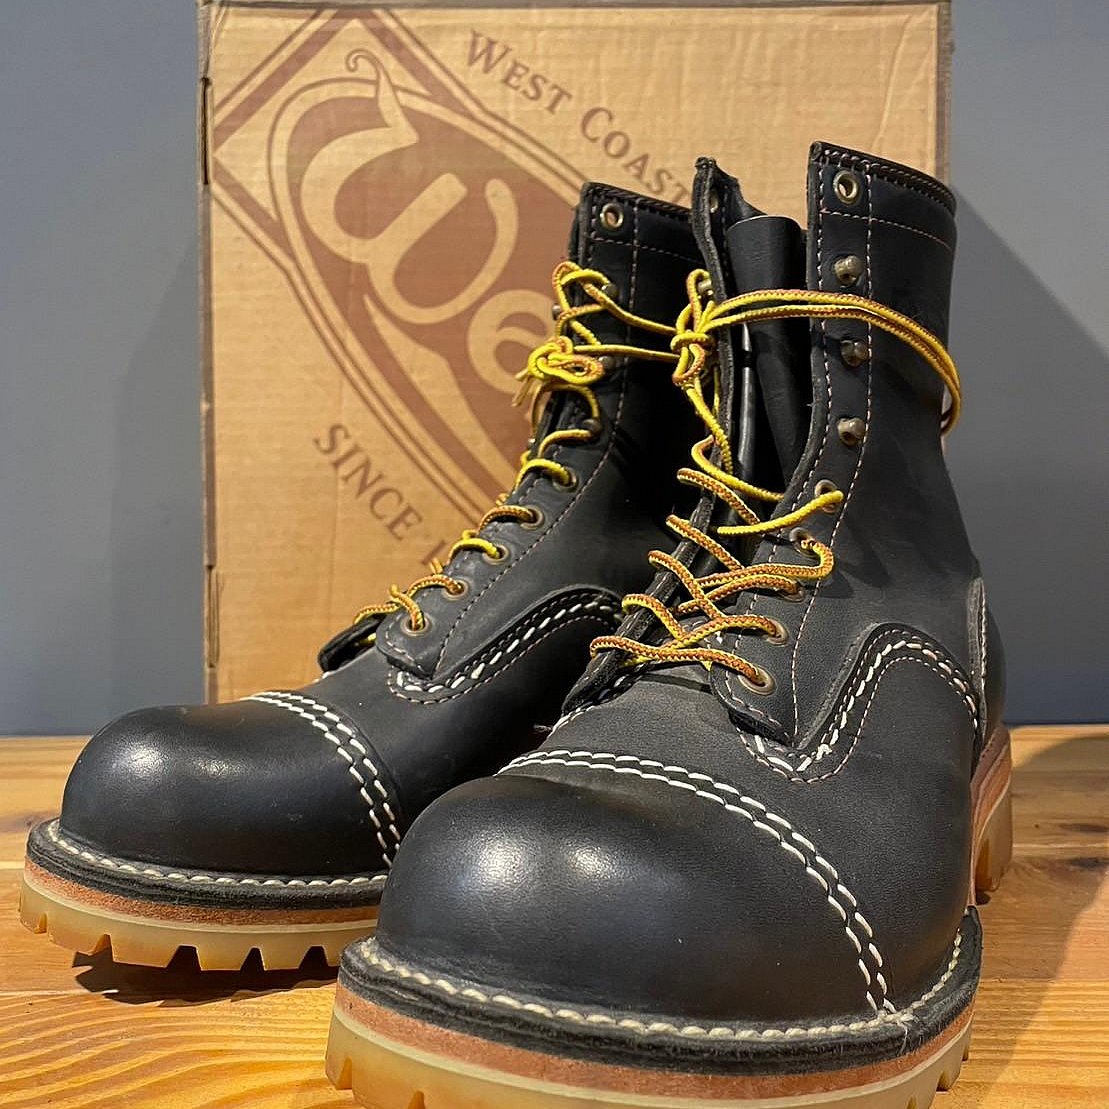 Wesco Boots - Jobmaster 8